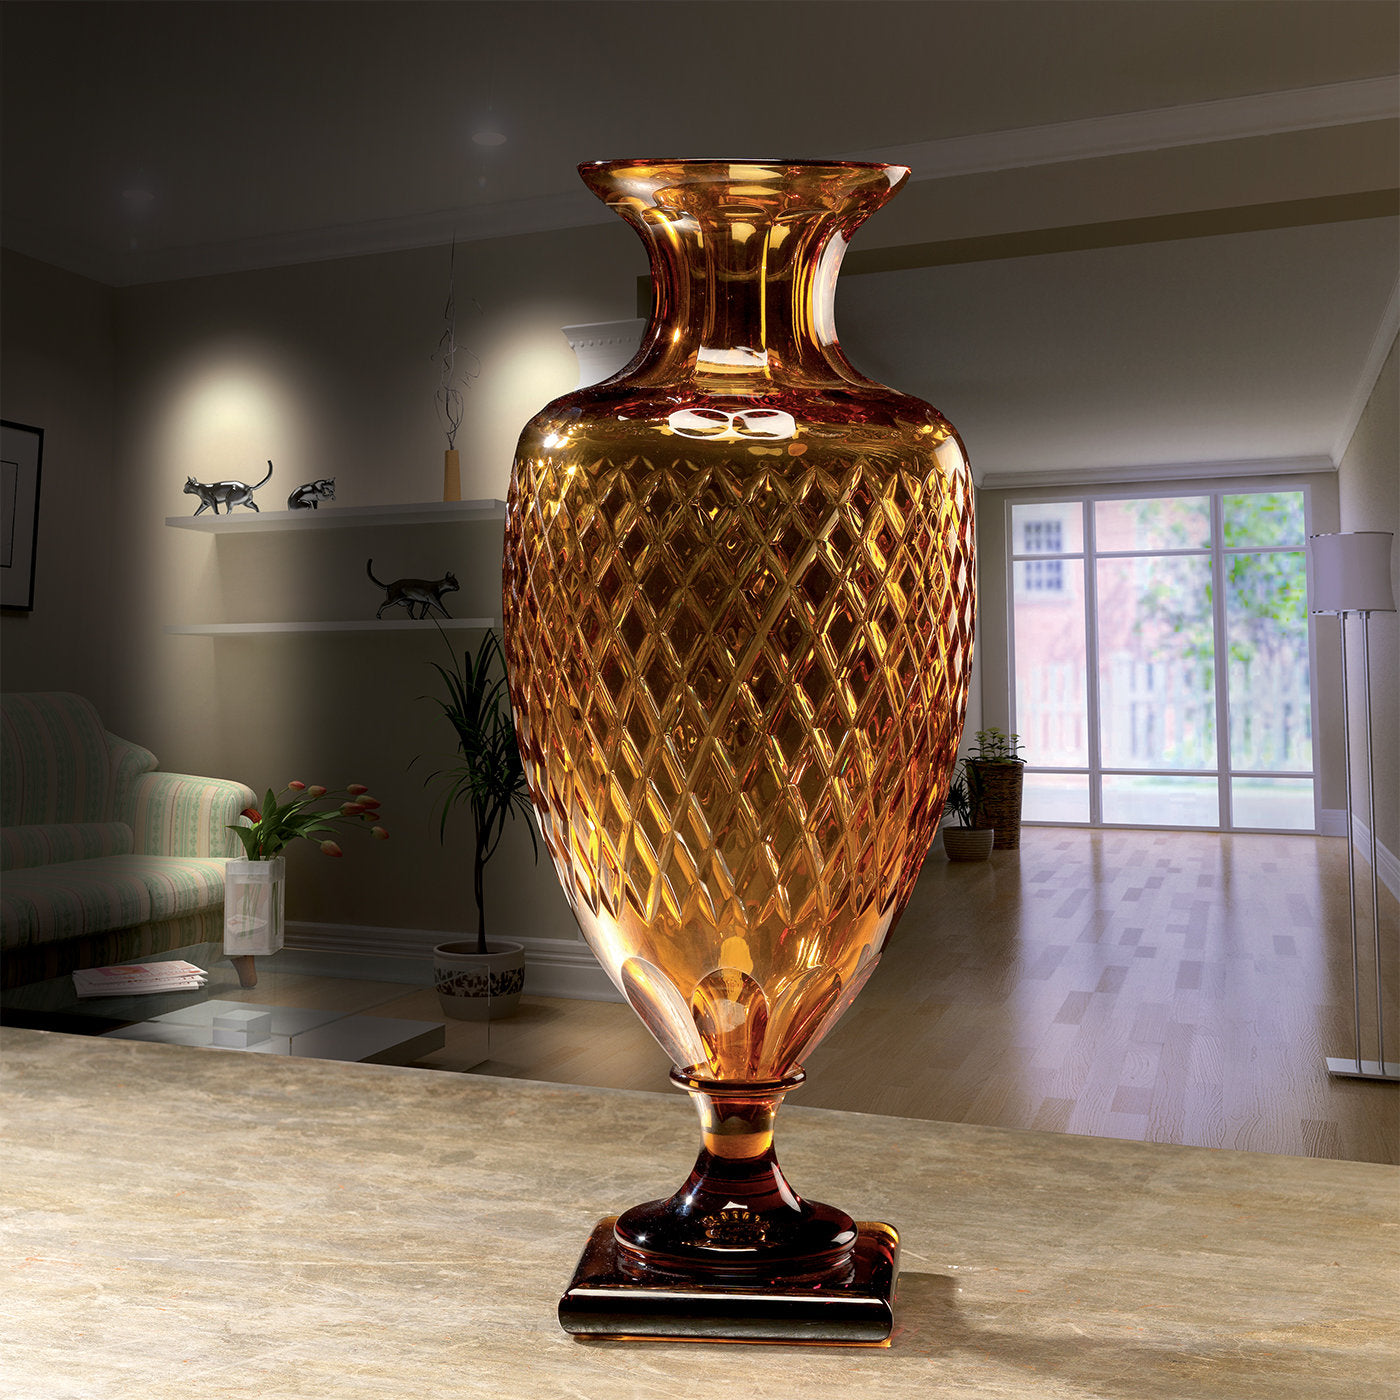 Amphora Crystal Vase in Amber - Alternative view 1